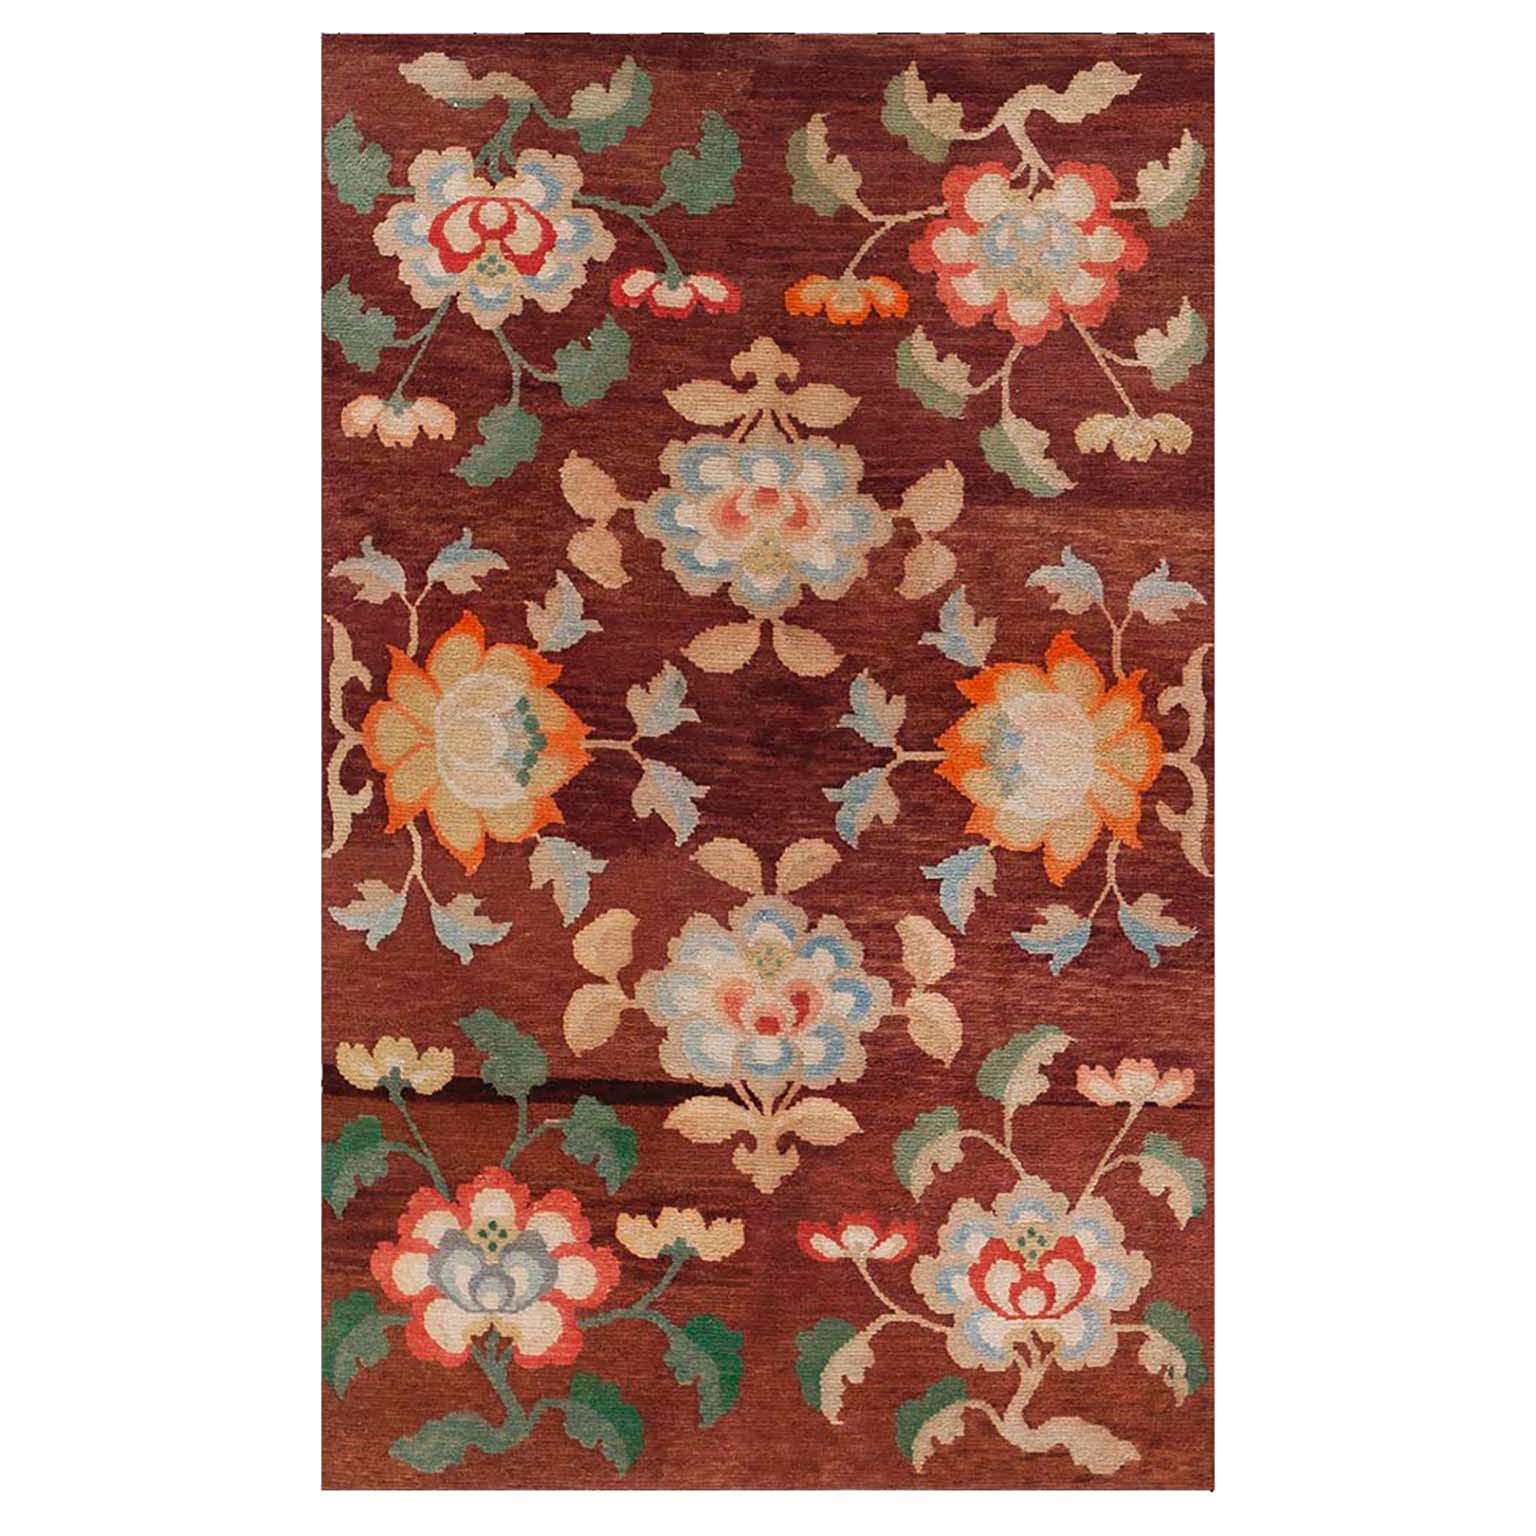 Early 20th Century Chinese Tibetan Carpet ( 3' x 5' - 90 x 152 )